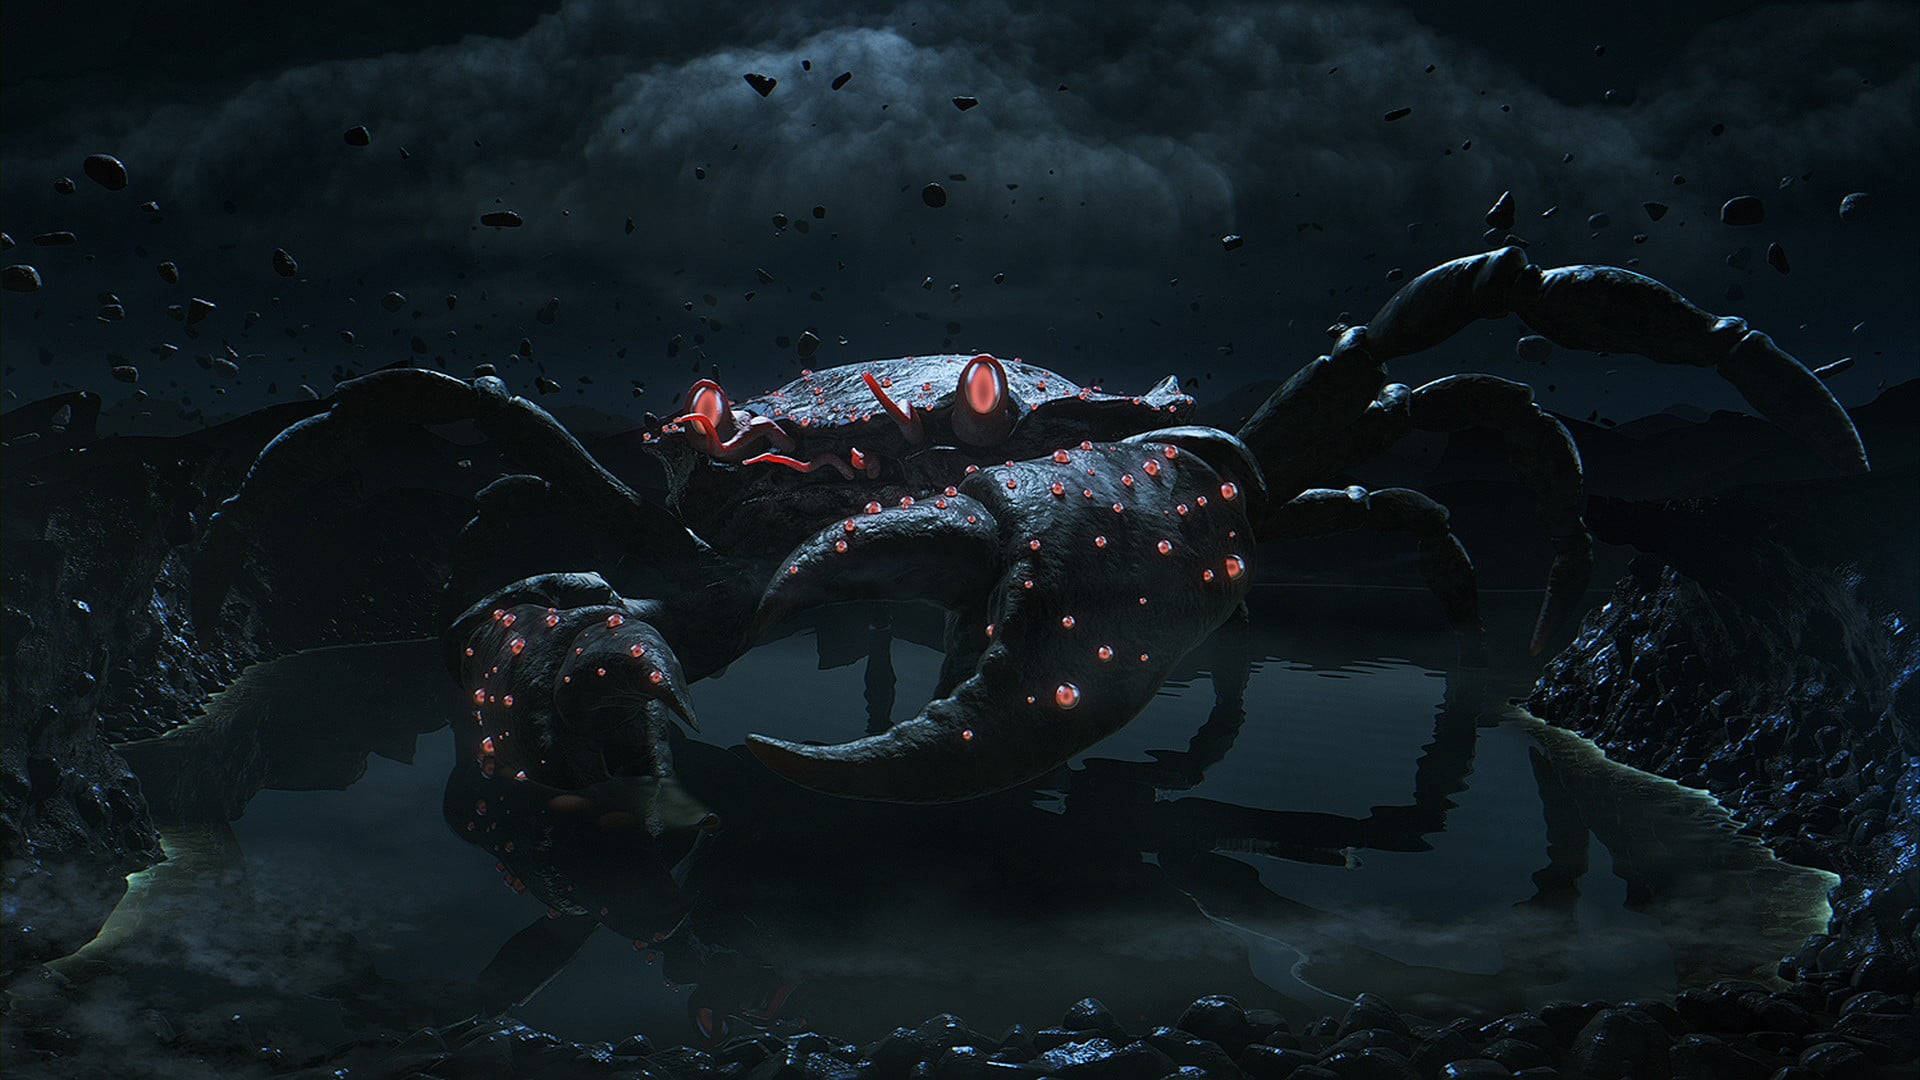 Red-eyed Black Monster Crab